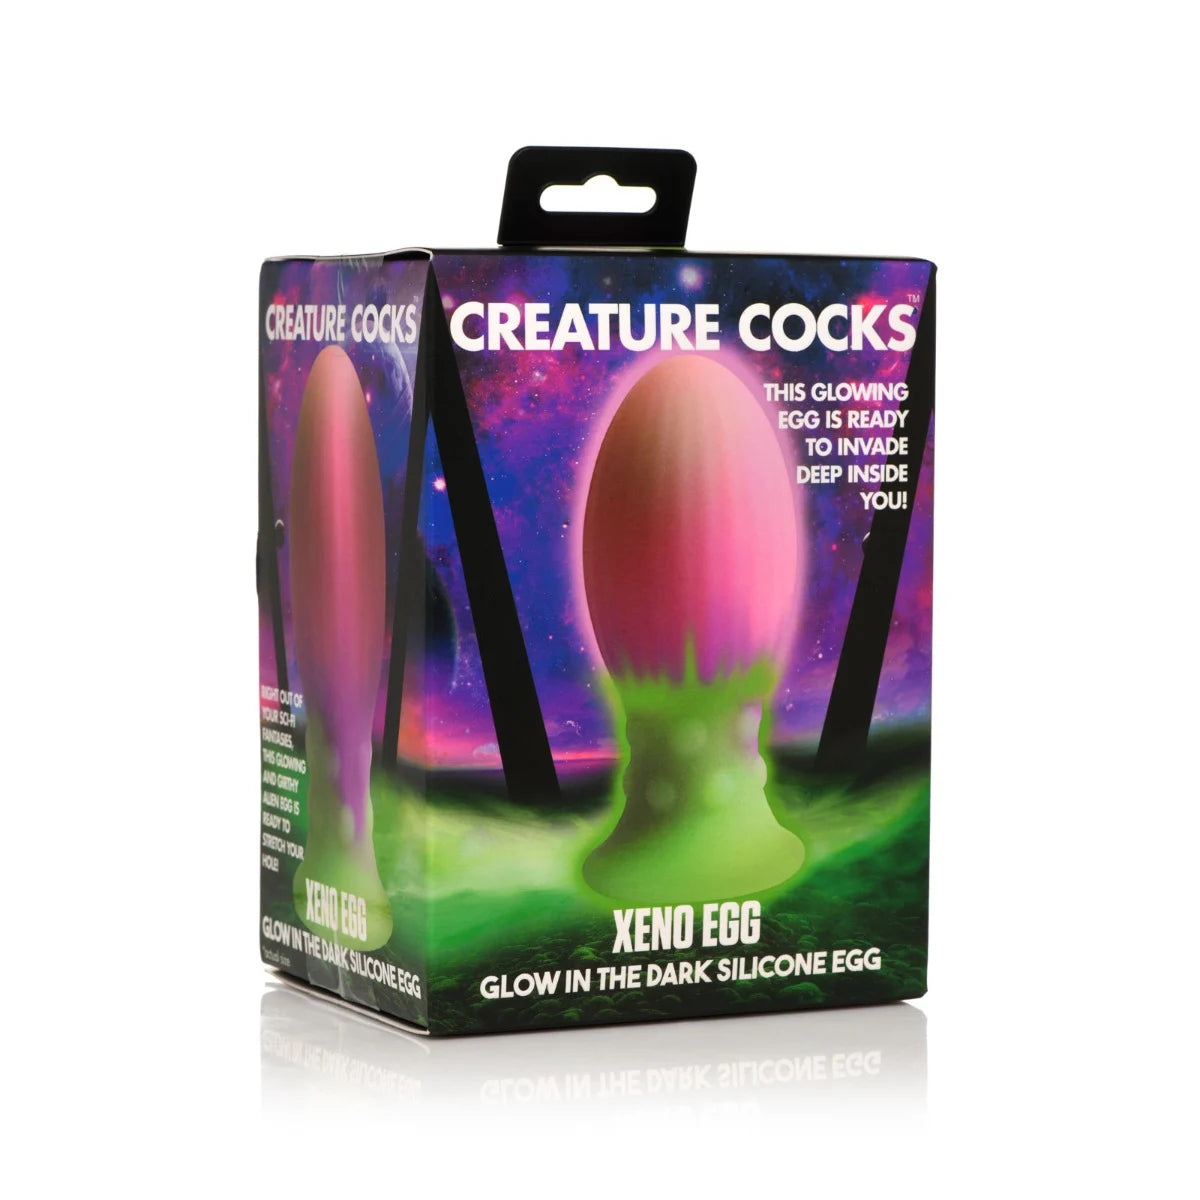 Creature Cocks Xeno Egg Glow in the Dark Silicone Egg Butt Plug Large (8158923096303)